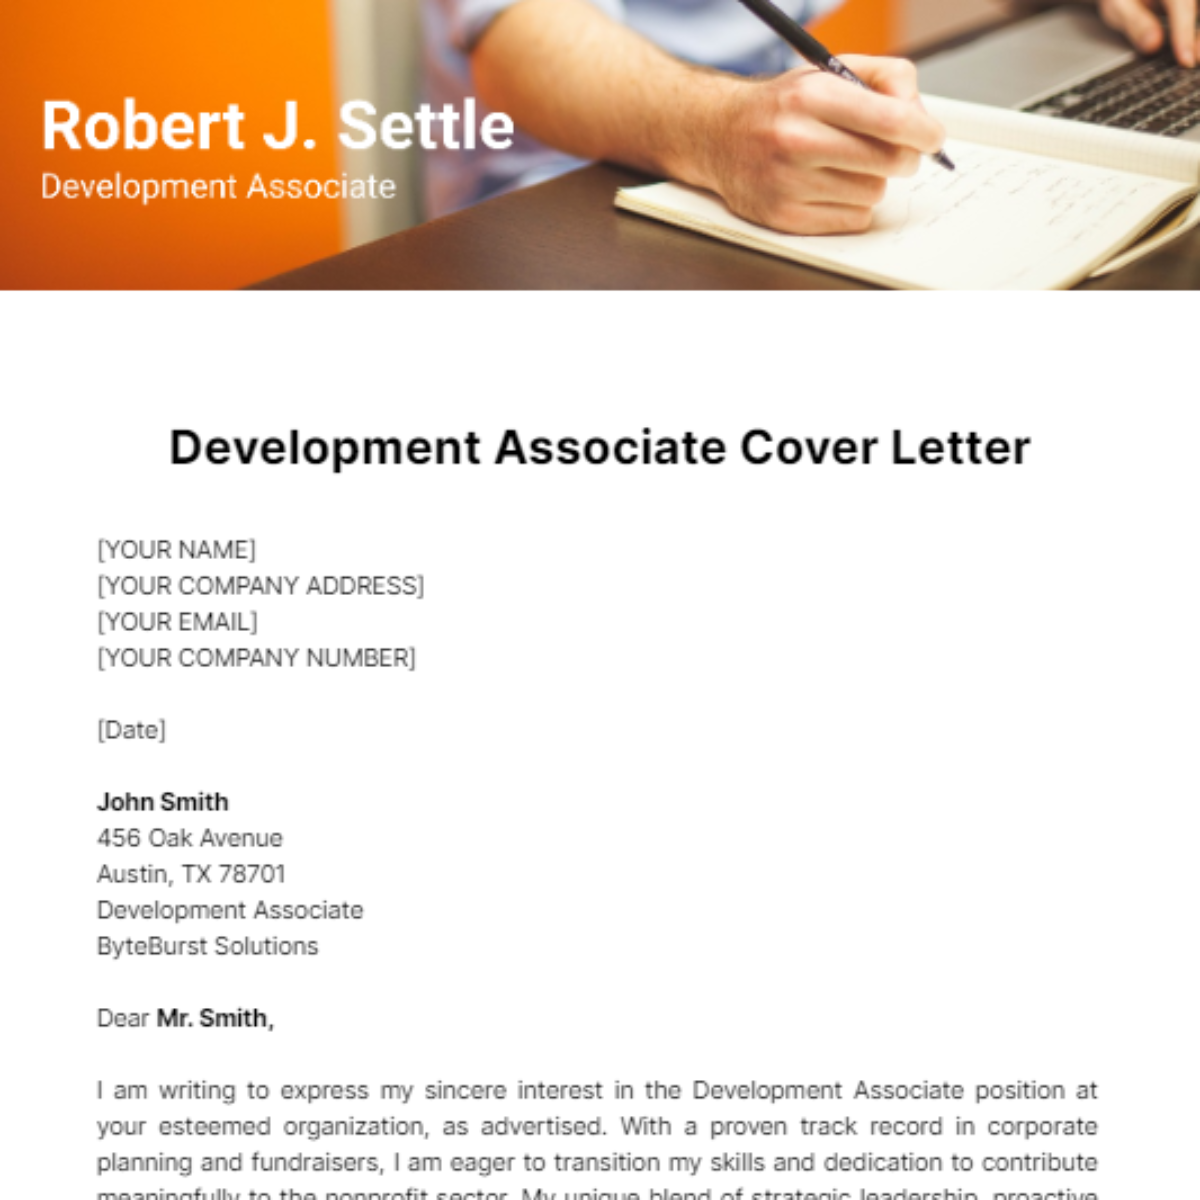 Development Associate Cover Letter Template